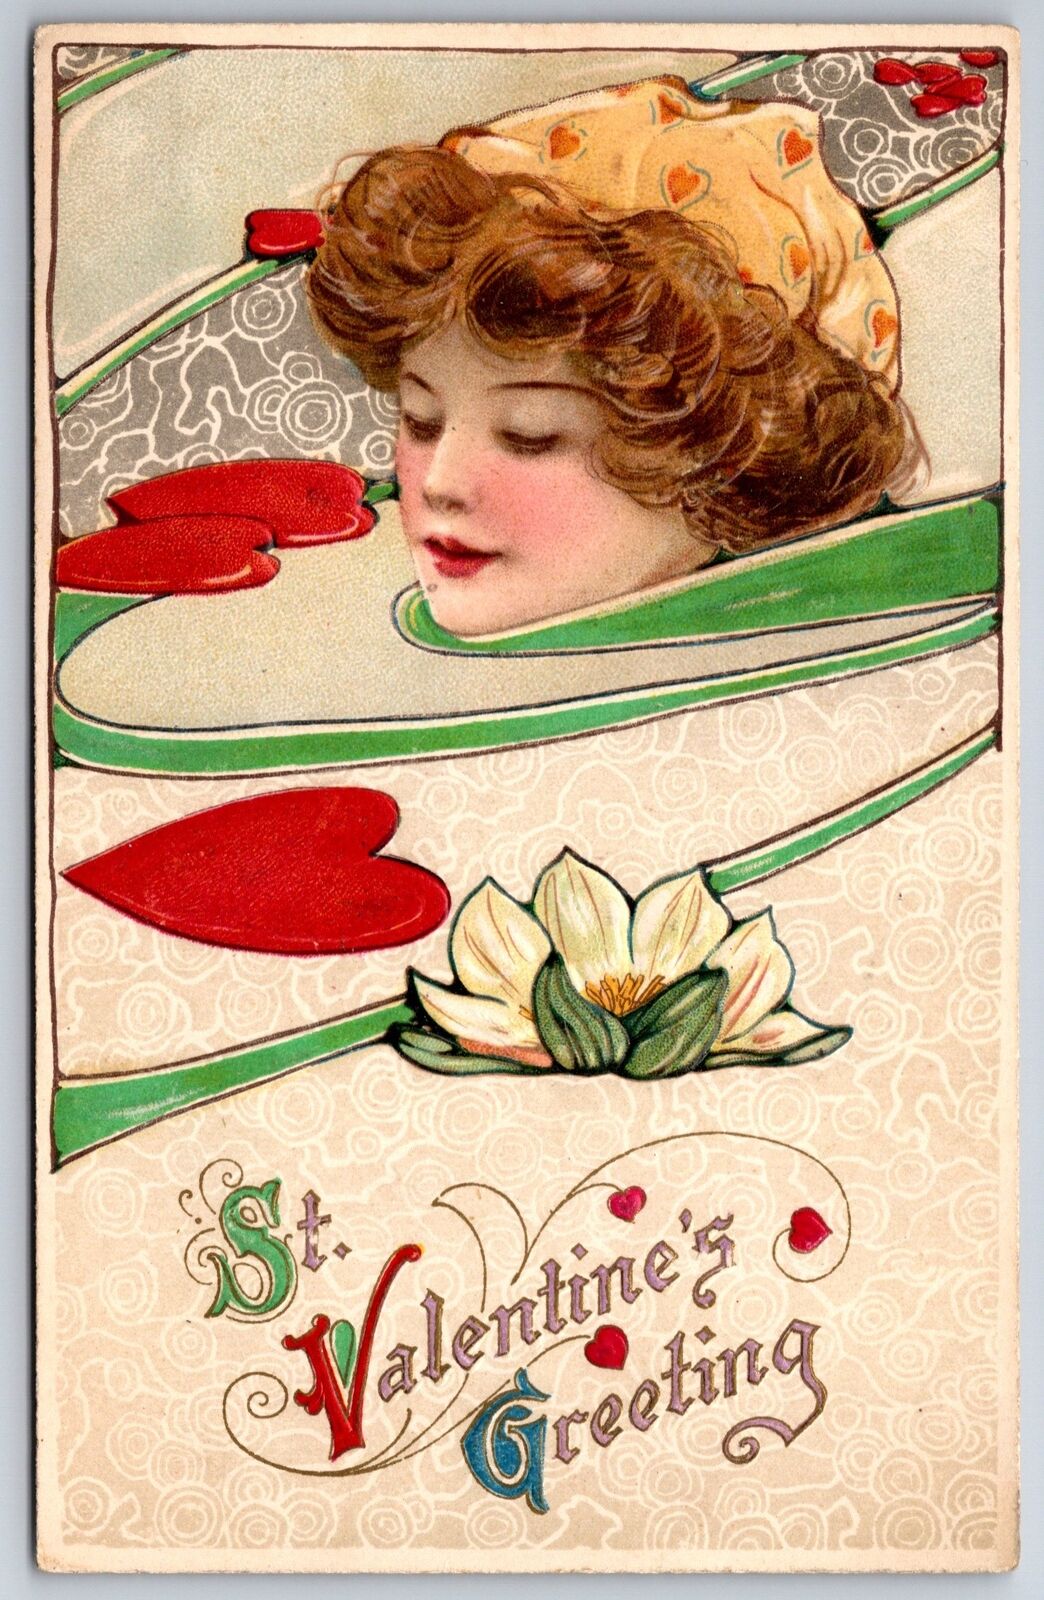 Schmucker Valentine~Lady Head Floats w/Hearts & Lily Pad~Art Nouveau Winsch~1910